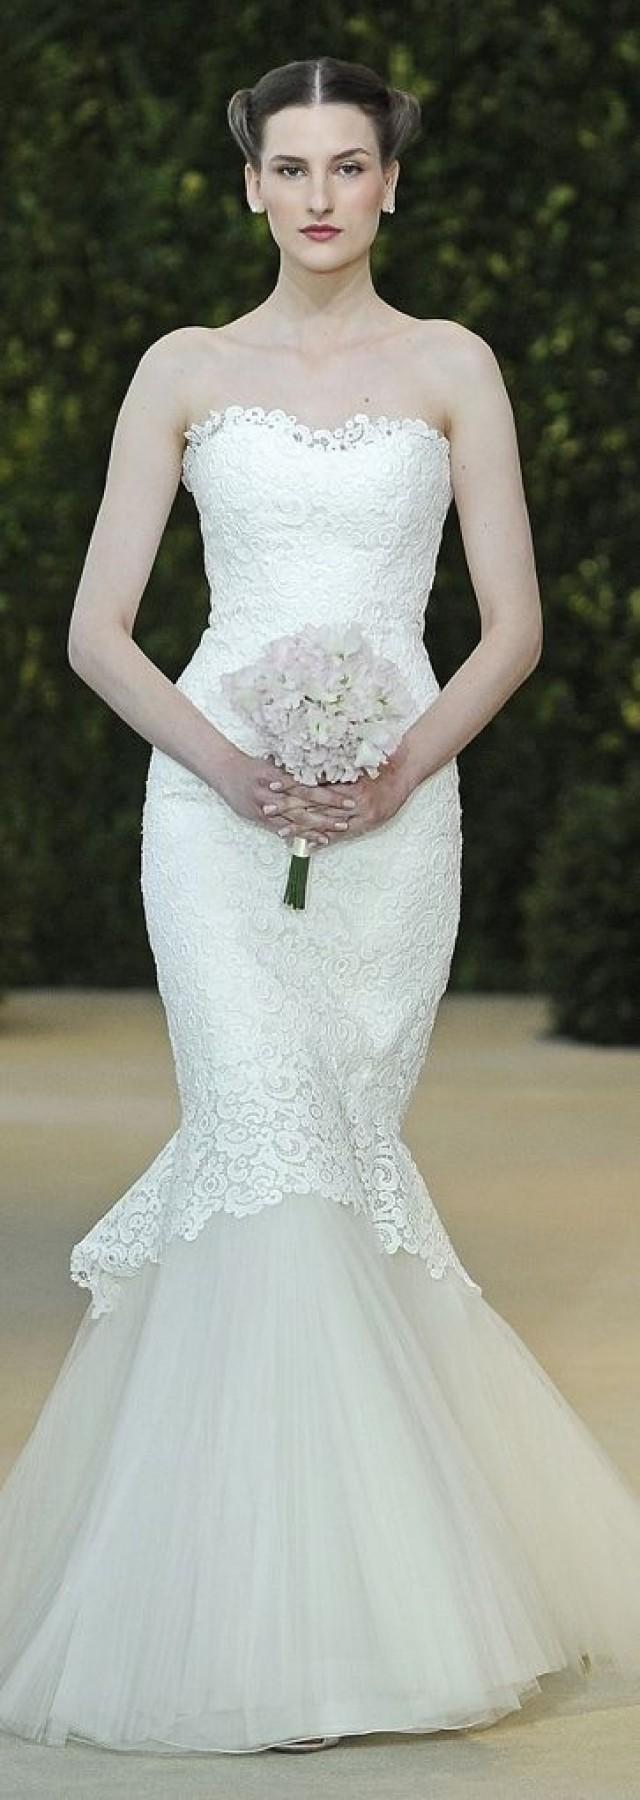 Dress - Fairytale Wedding Dresses #2062565 - Weddbook